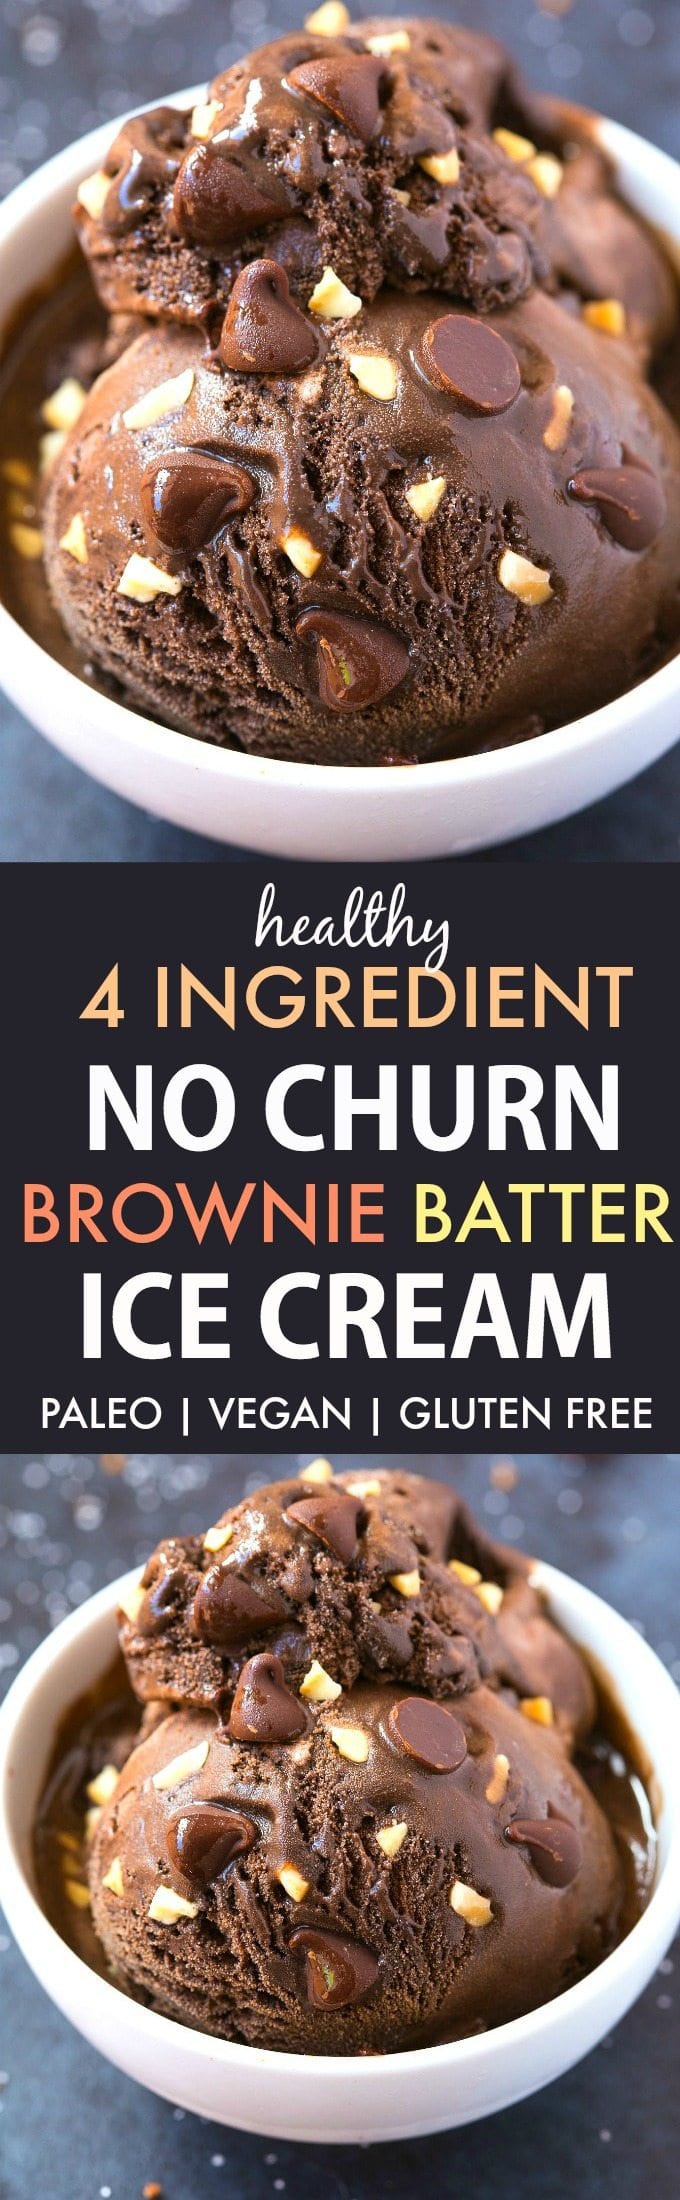 4 Ingredient No Churn Brownie Batter Ice Cream (V, GF, Paleo)- An easy and guilt-free 4 ingredient recipe for thick and creamy brownie batter ice cream! {vegan, gluten free, dairy free, sugar free}- thebigmansworld.com